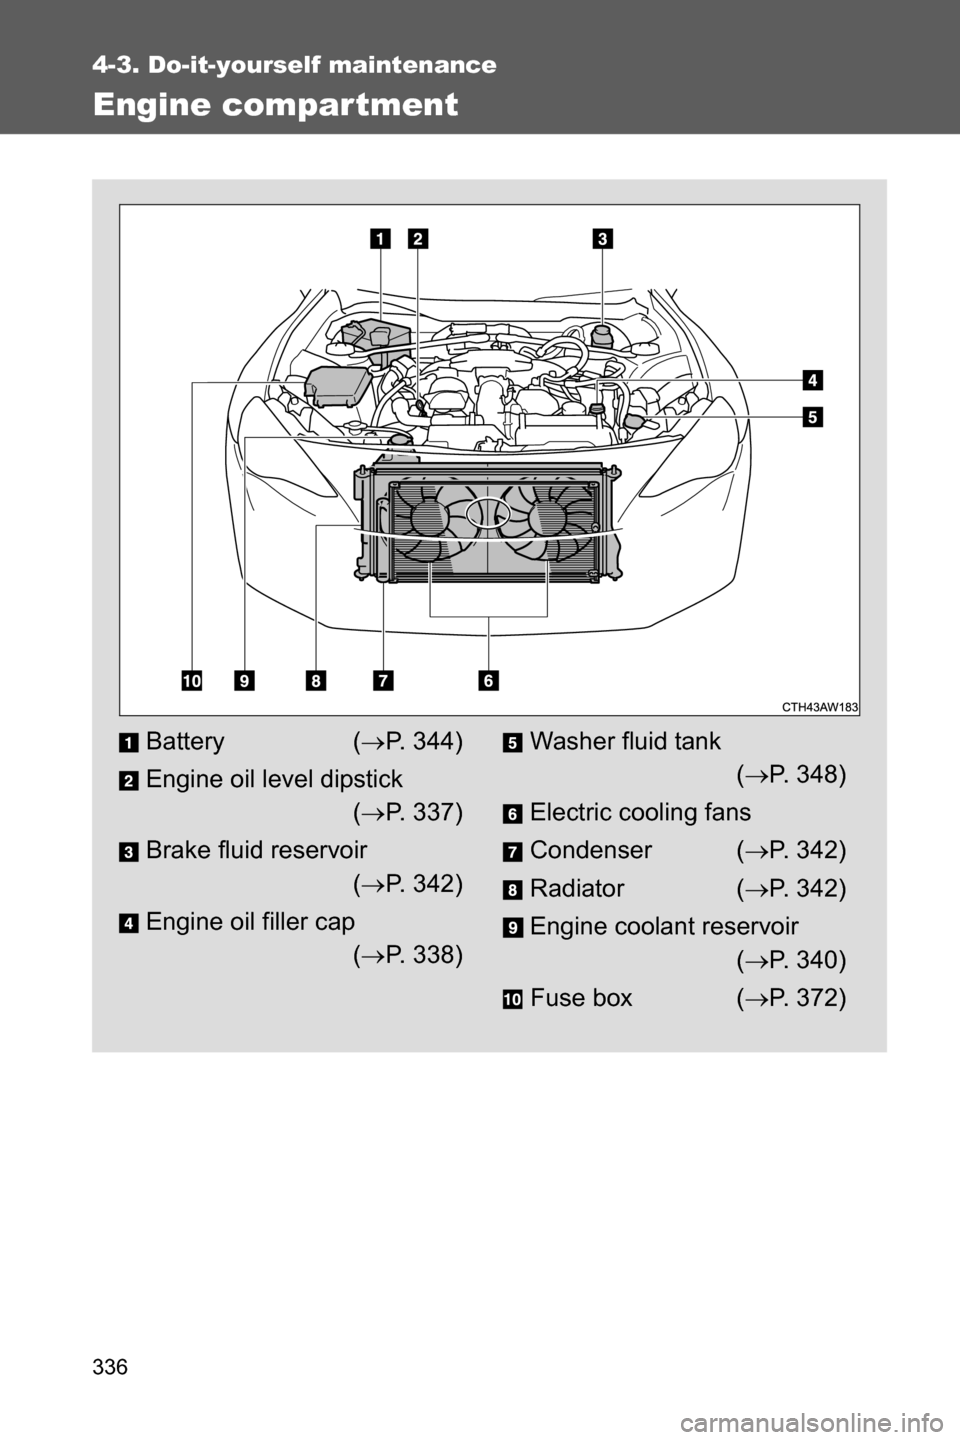 SUBARU BRZ 2017 1.G Owners Guide 336
4-3. Do-it-yourself maintenance
Engine compartment
Battery (�oP. 344)
Engine oil level dipstick
(�oP.  3 3 7 )
Brake fluid reservoir
(�oP. 342)
Engine oil filler cap
(�oP.  3 3 8 )Washer fluid tan